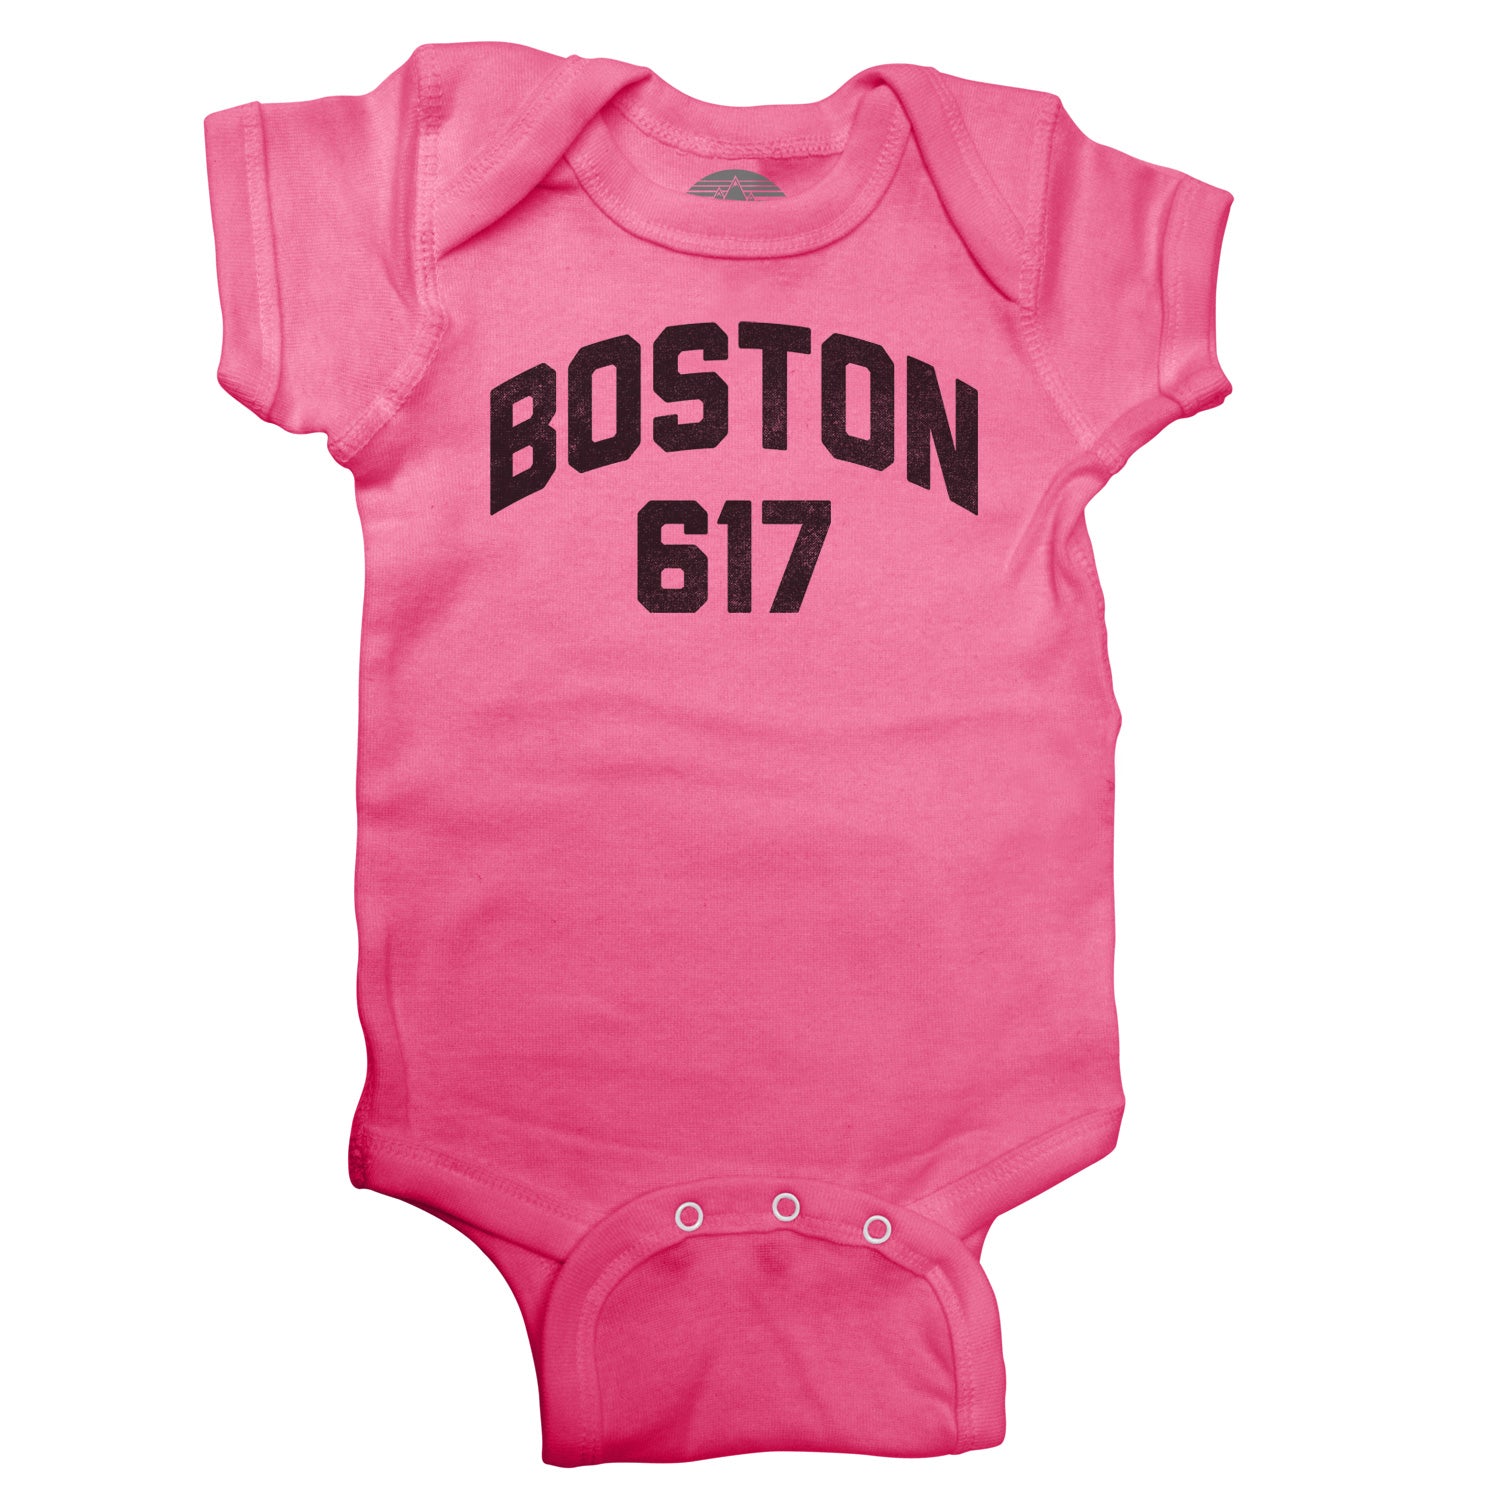 Boston 617 Area Code Infant Bodysuit - Unisex Fit